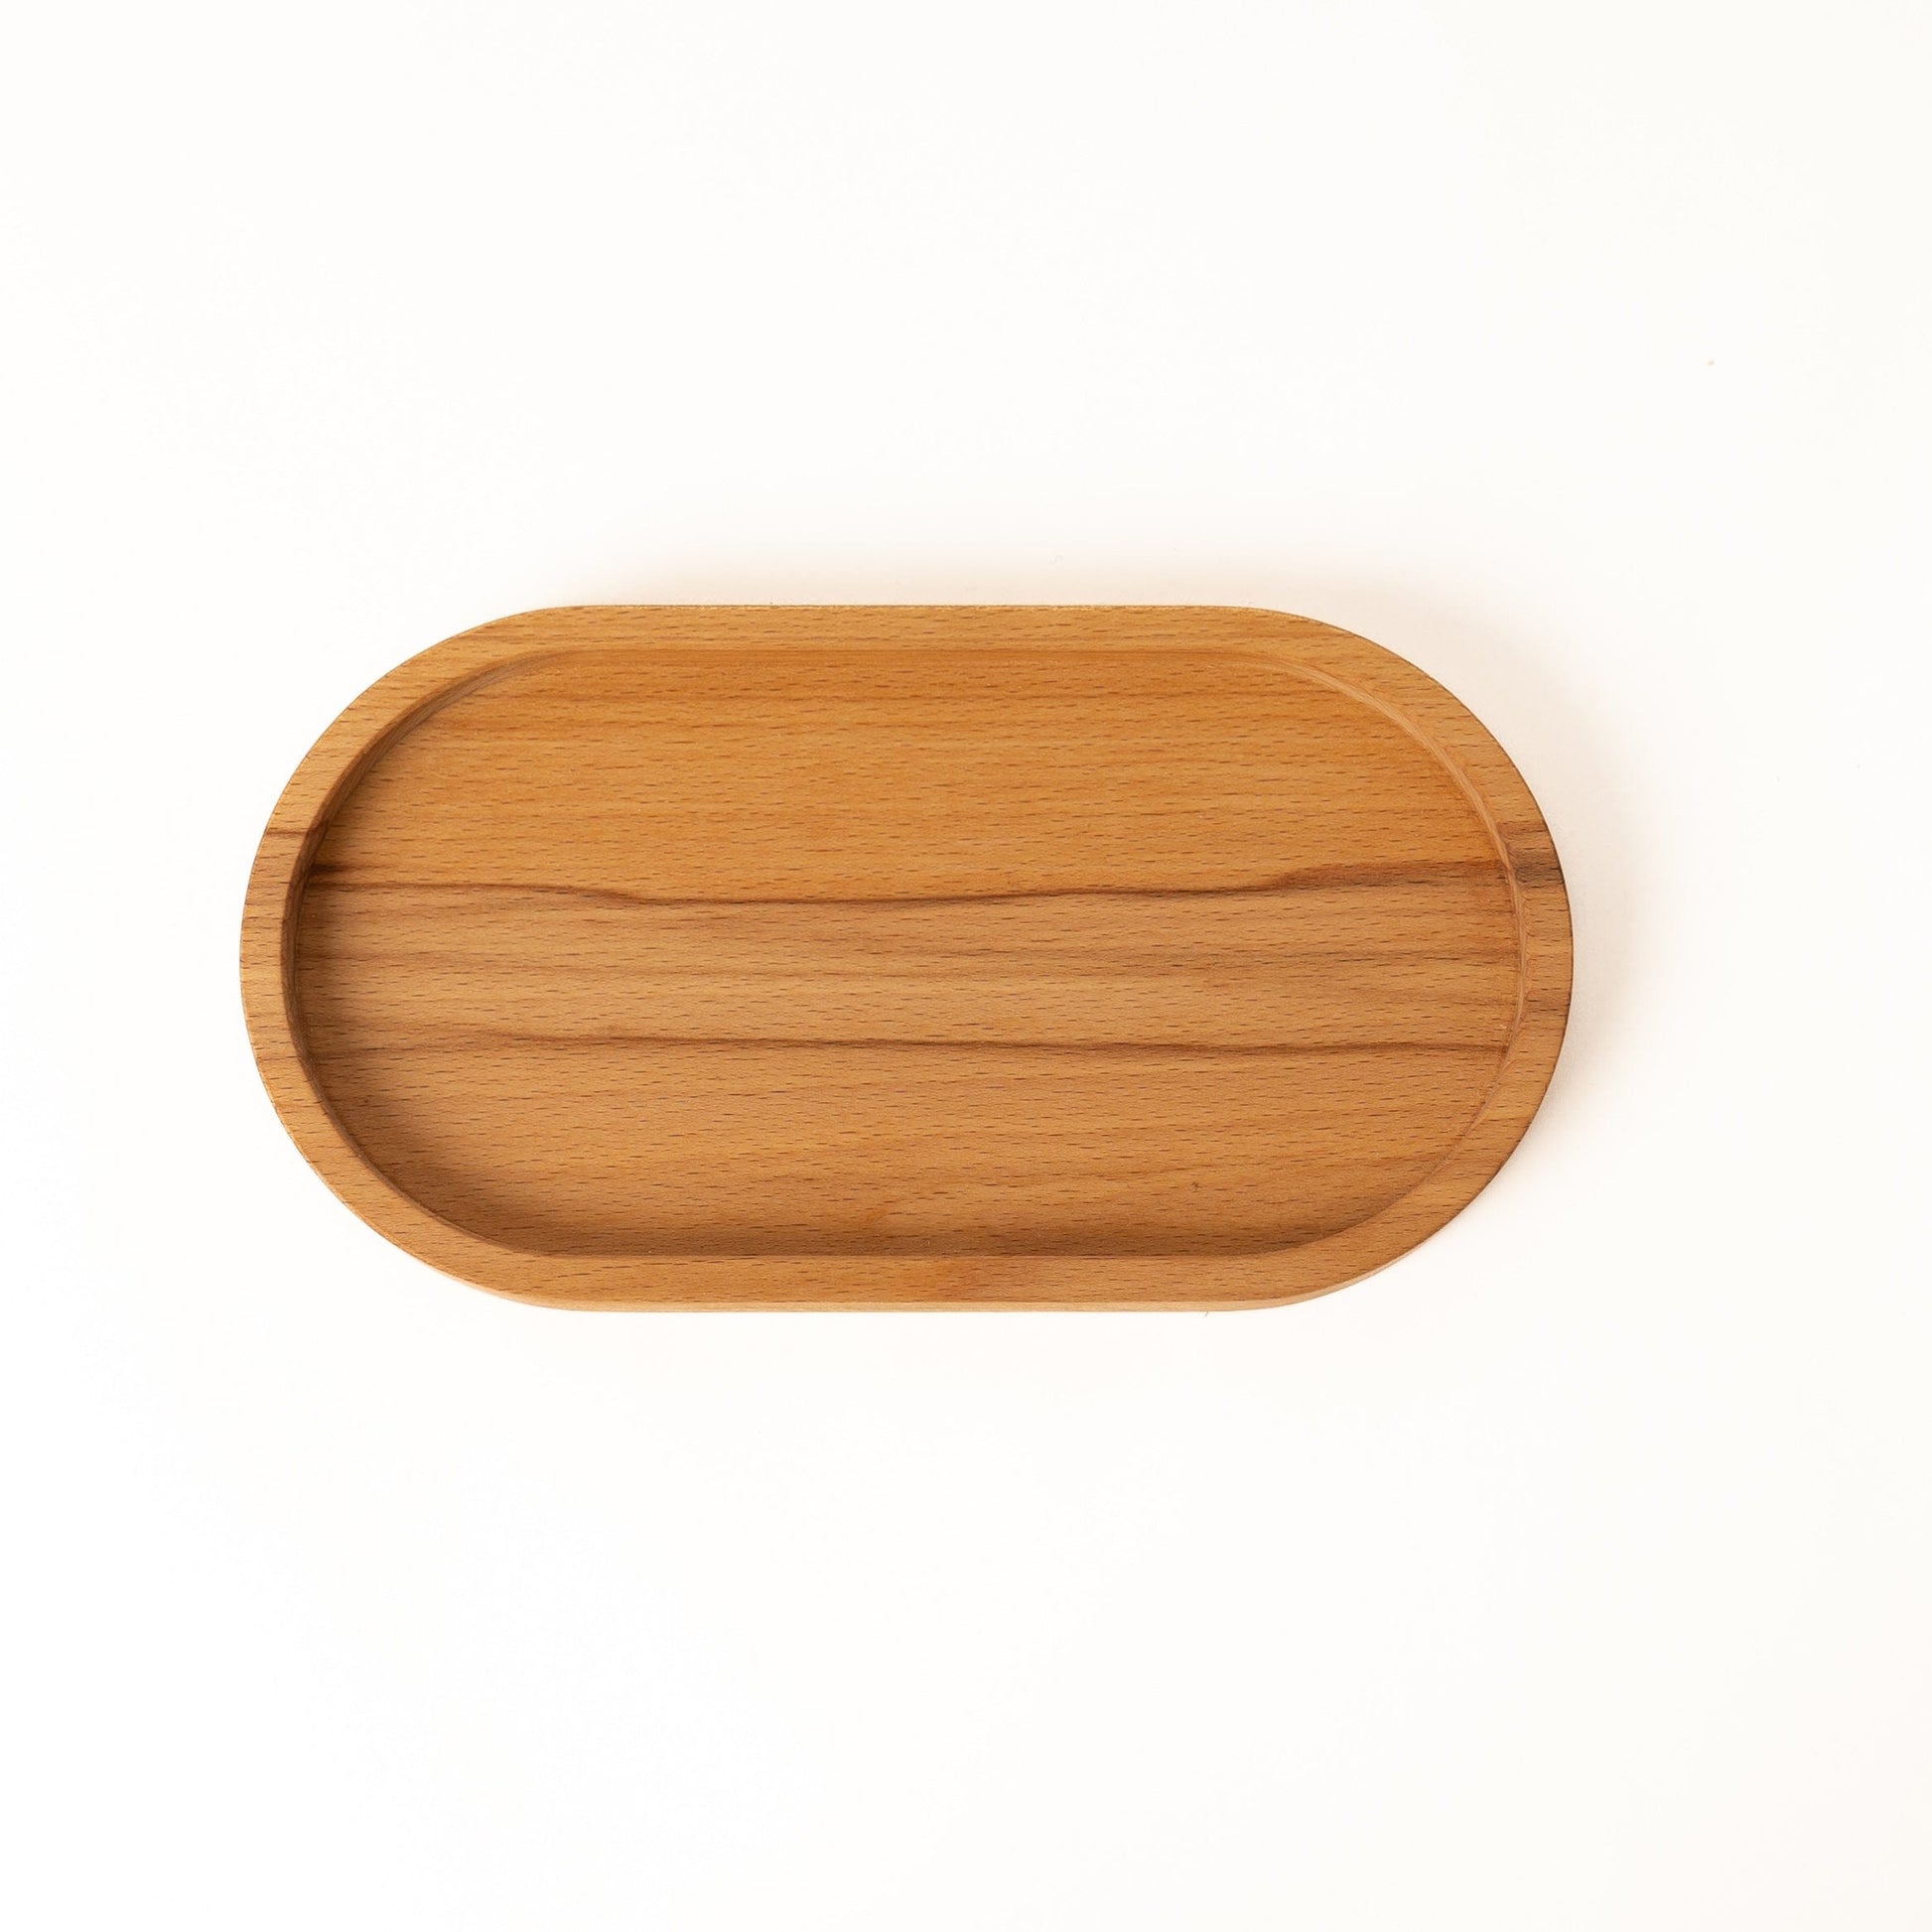 Holzmanufaktur Deko Tablett oval - Edle Geschenke aus Holz - Schmuckschale Schale aus Holz